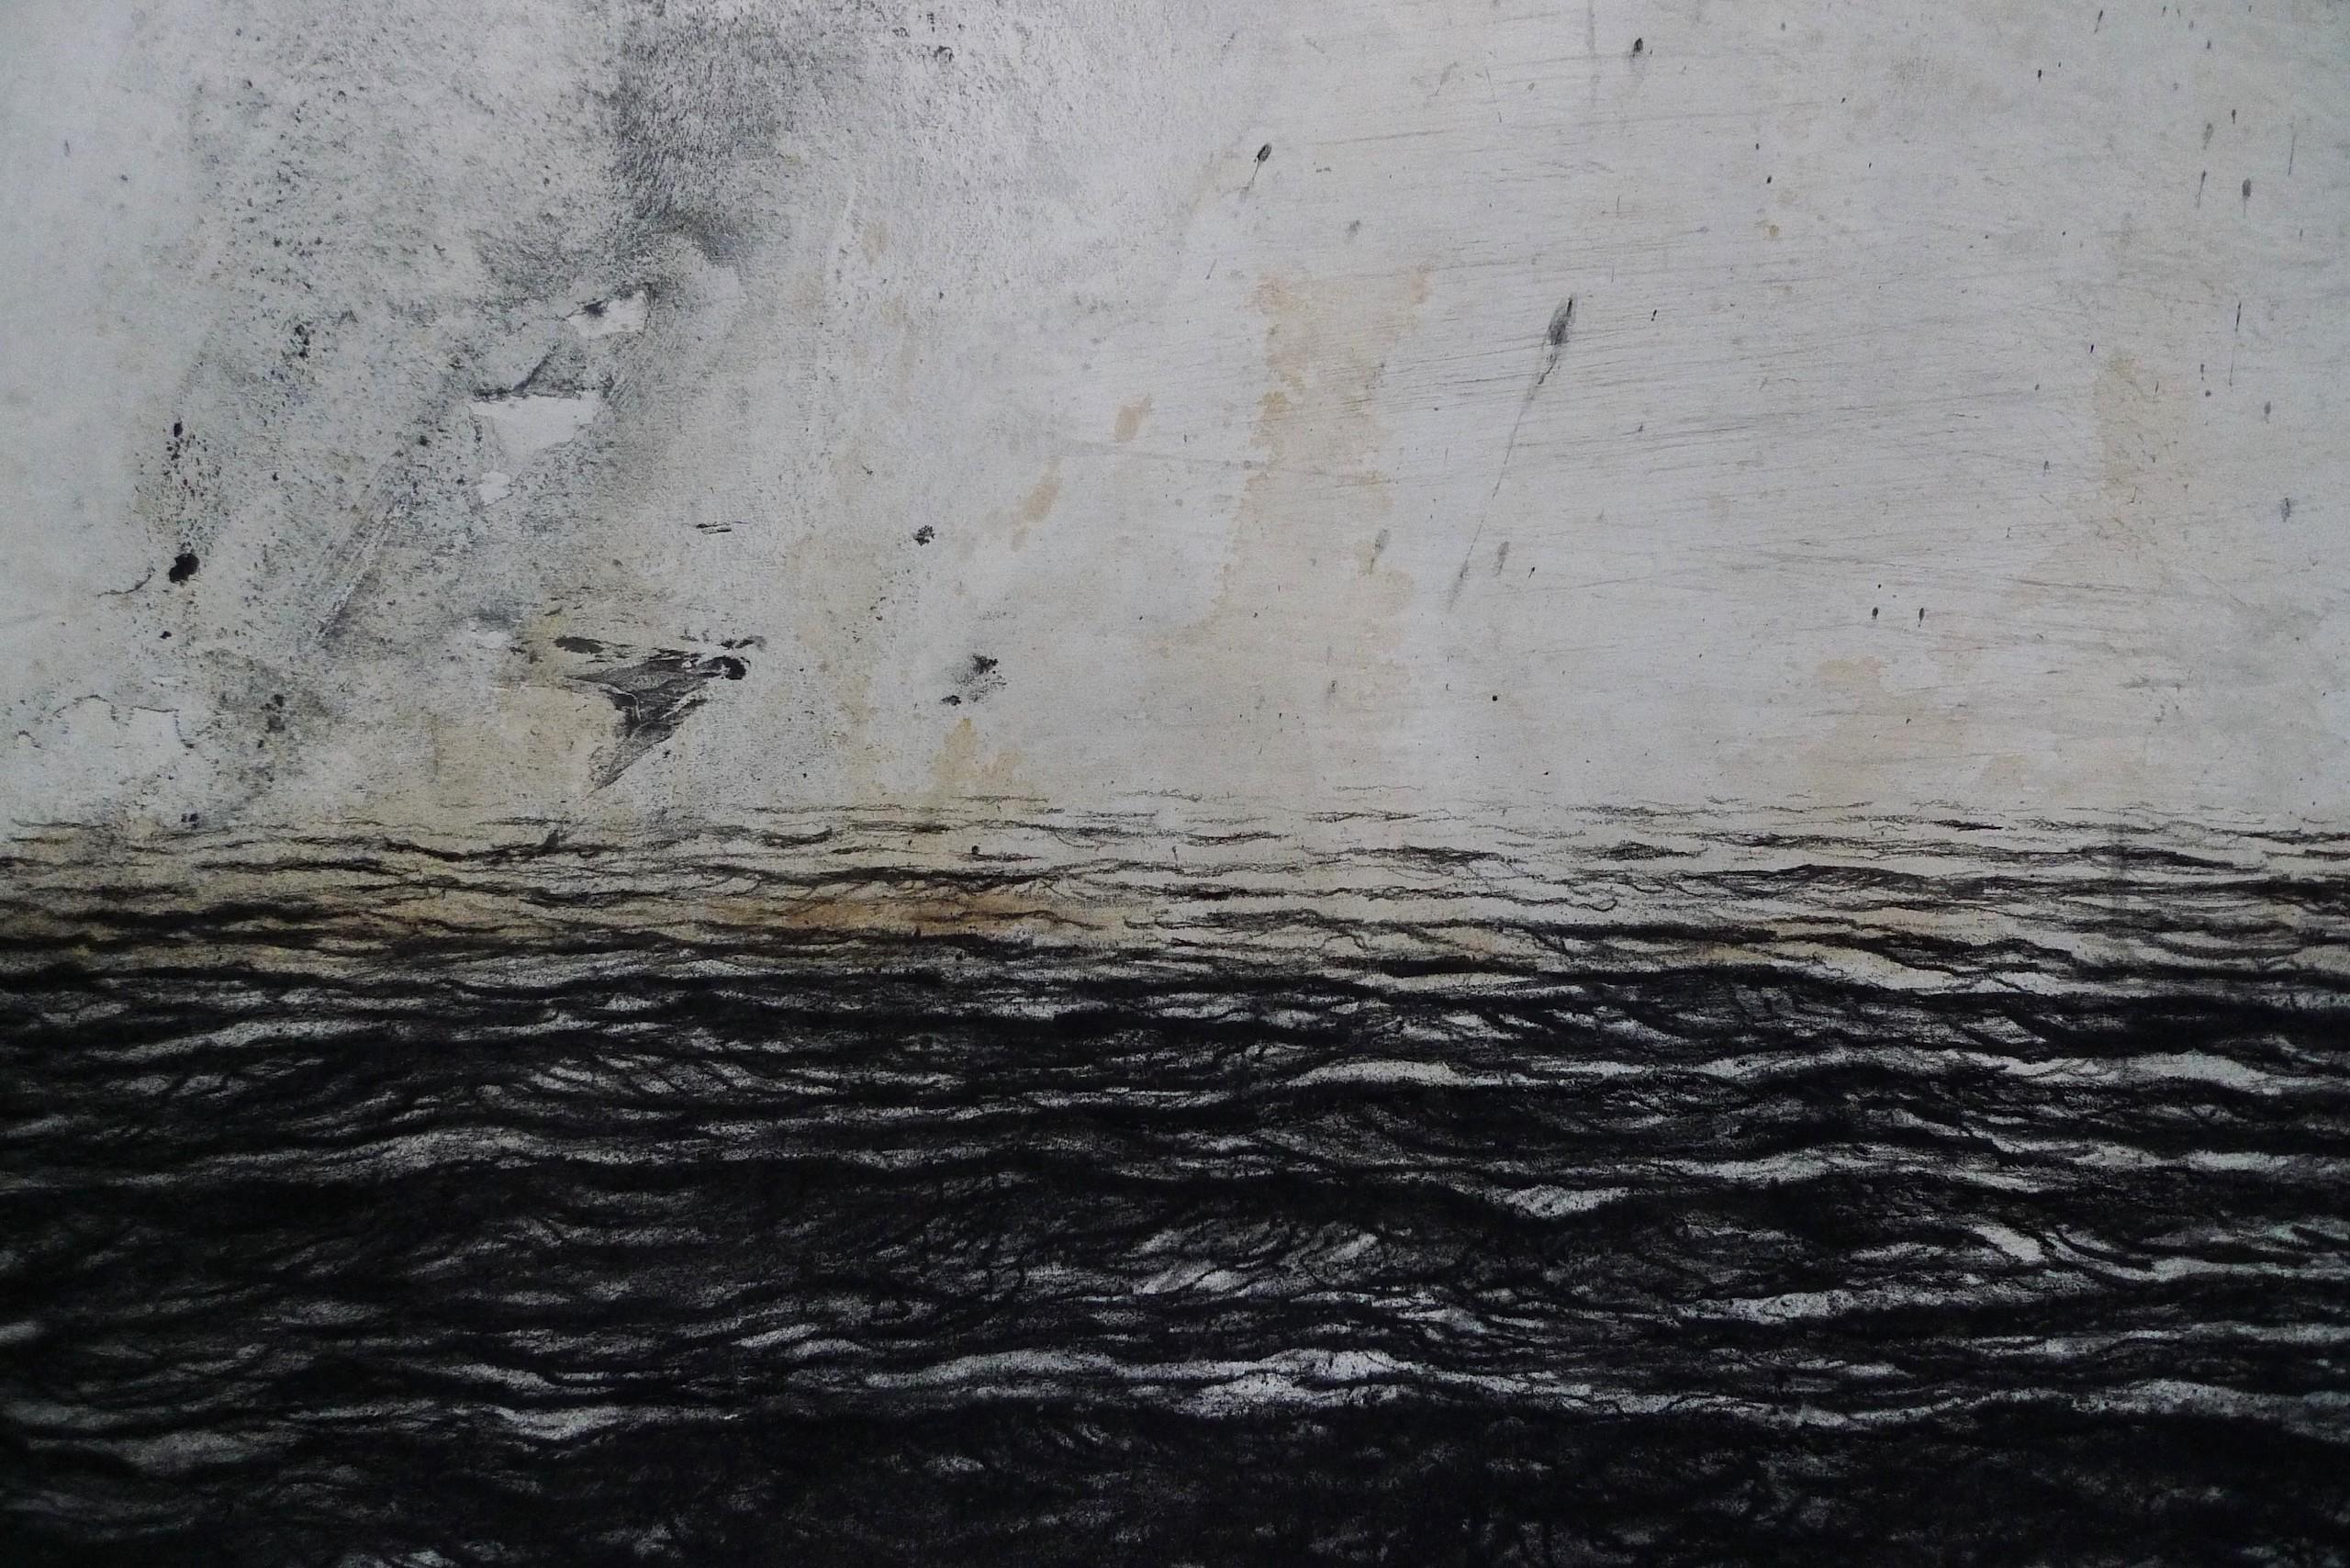 Cyclone by Franco Salas Borquez - Black & white painting, ocean waves, seascape For Sale 4